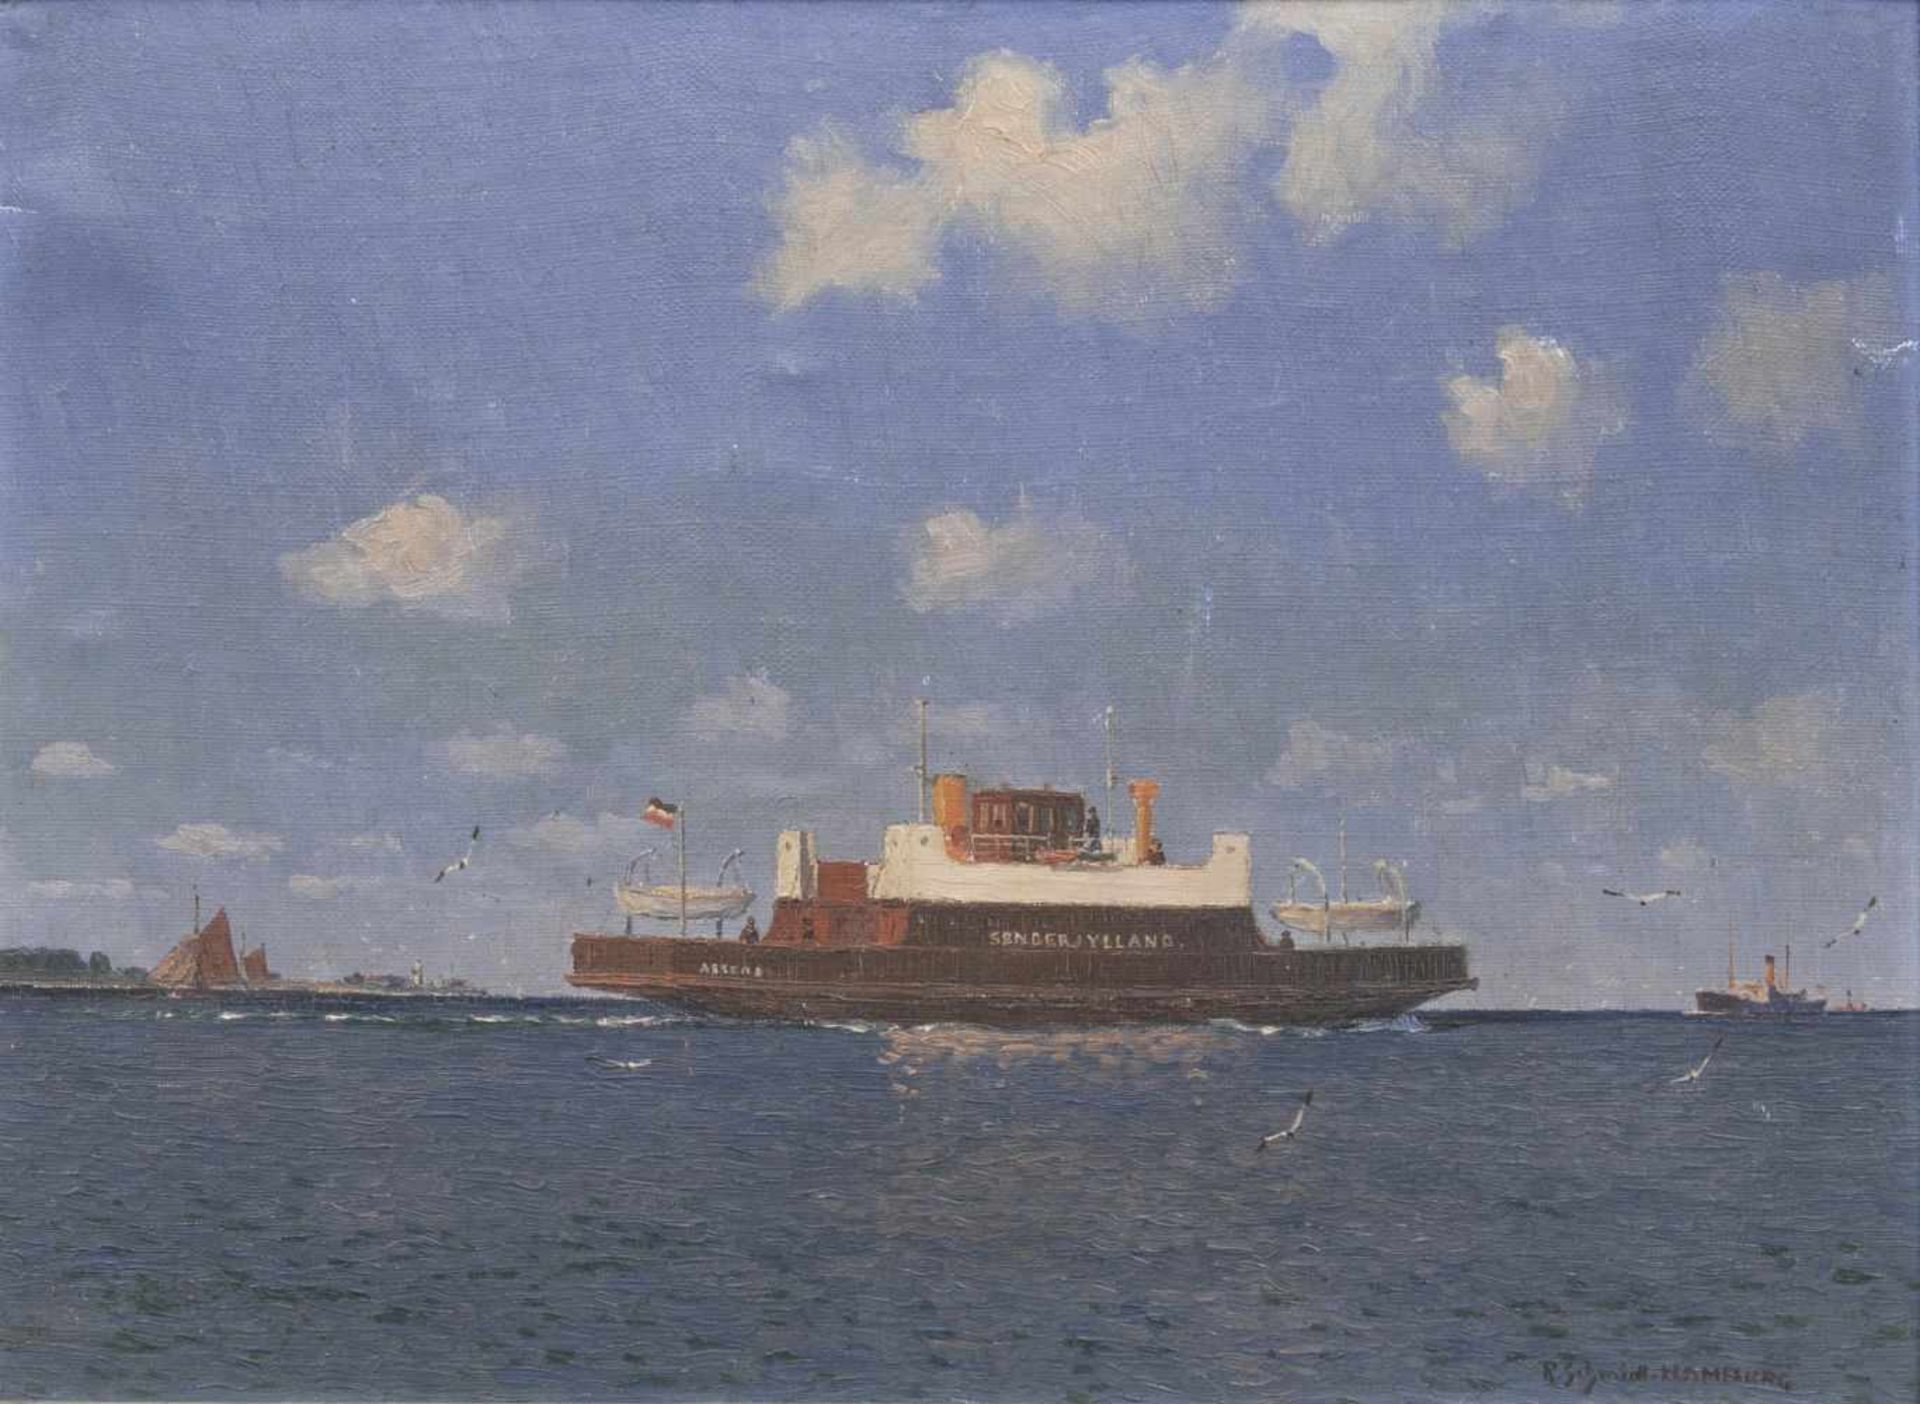 Robert Schmidt-Hamburg(Berlin 1885 - Laboe 1963)Sonderjylland-FähreÖl/Lw./Karton, 31 x 42 cm, r.